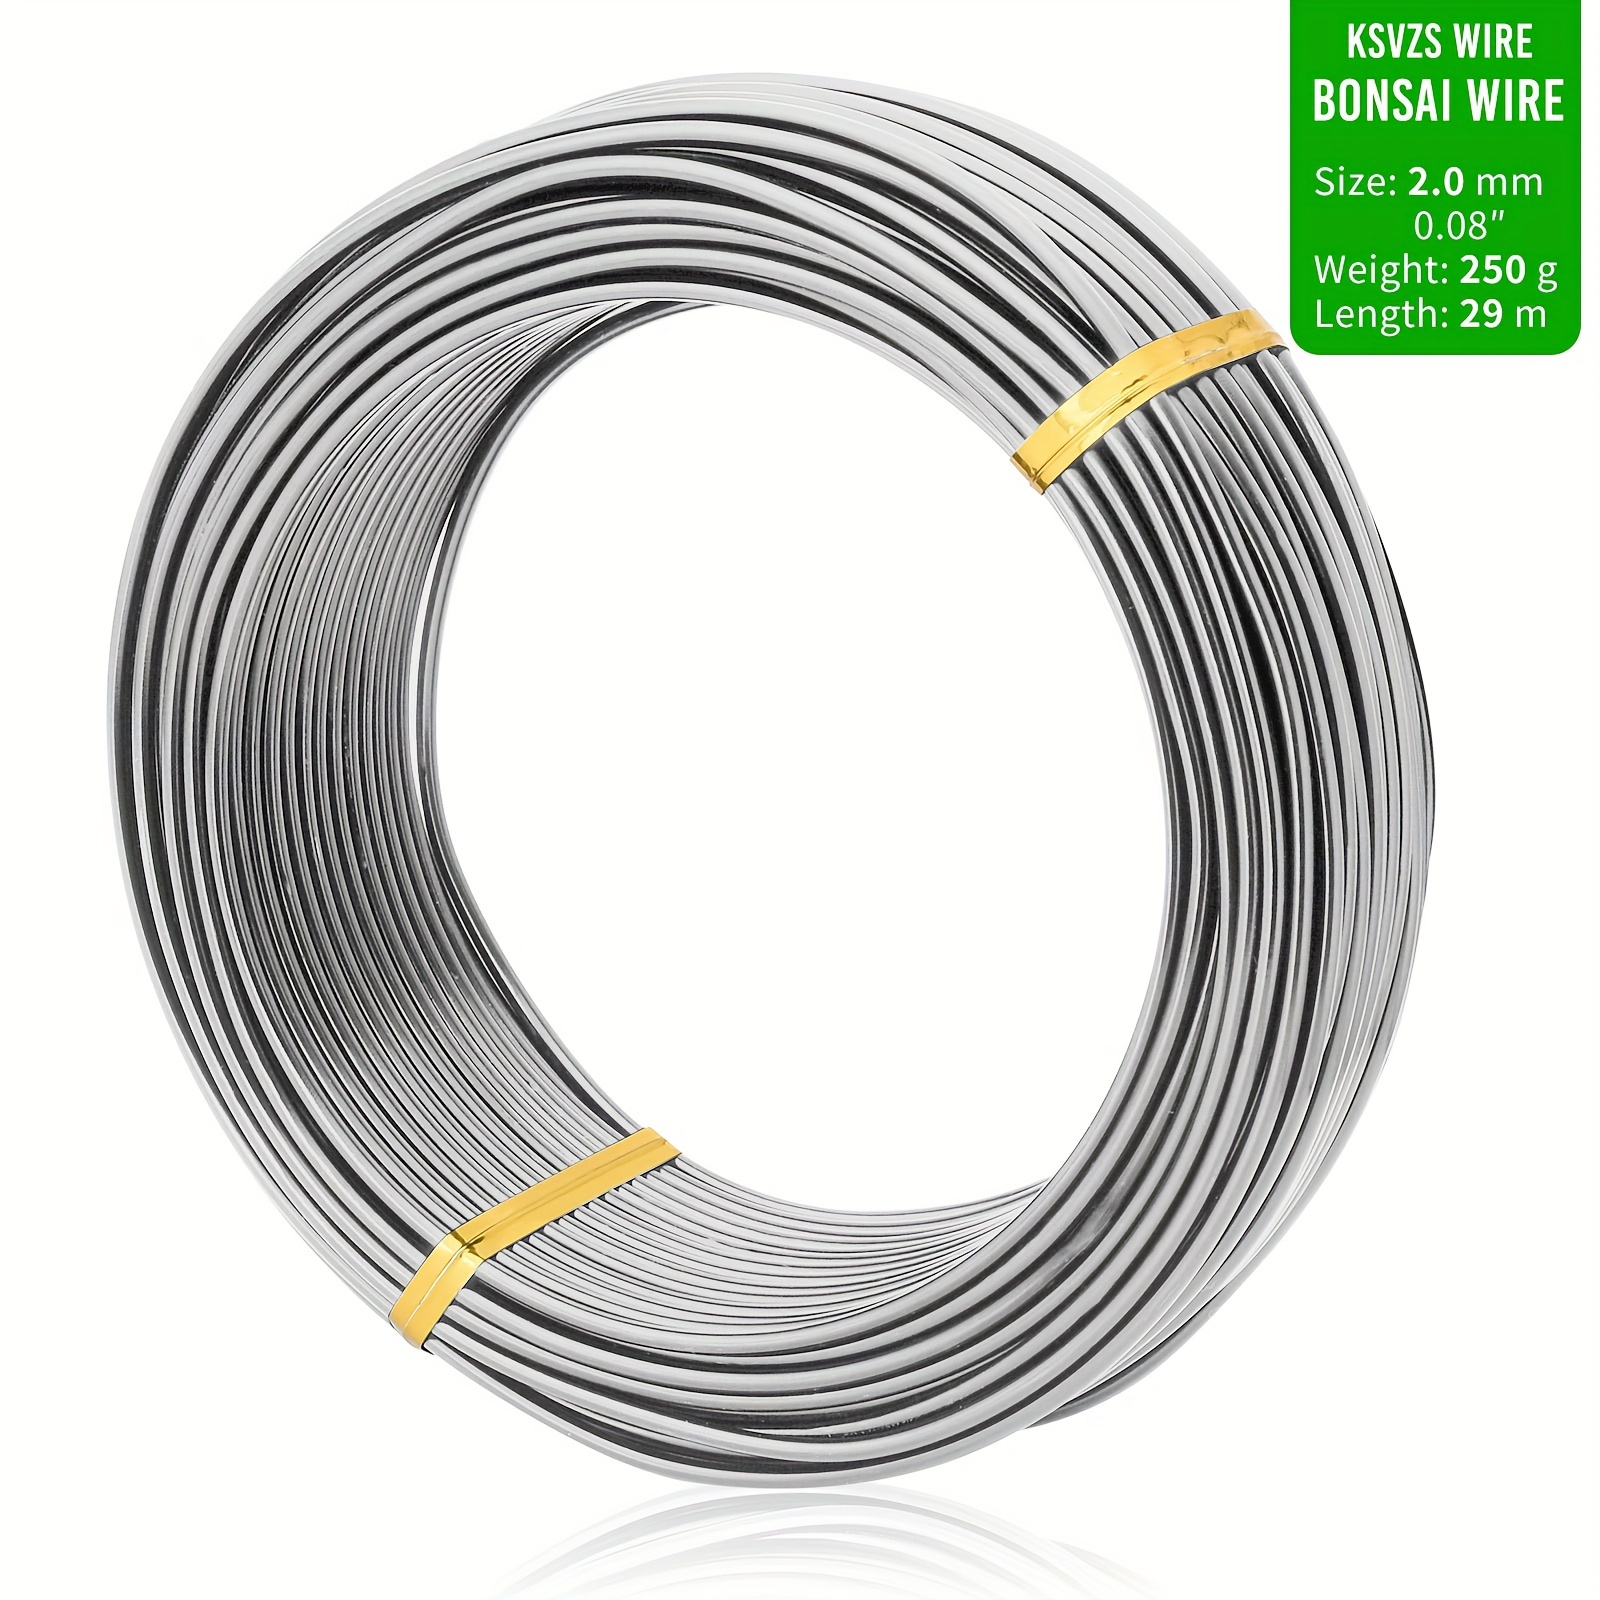 2.0mm (12 Gauge) Aluminum Wire 10 Yds/Roll - Silver